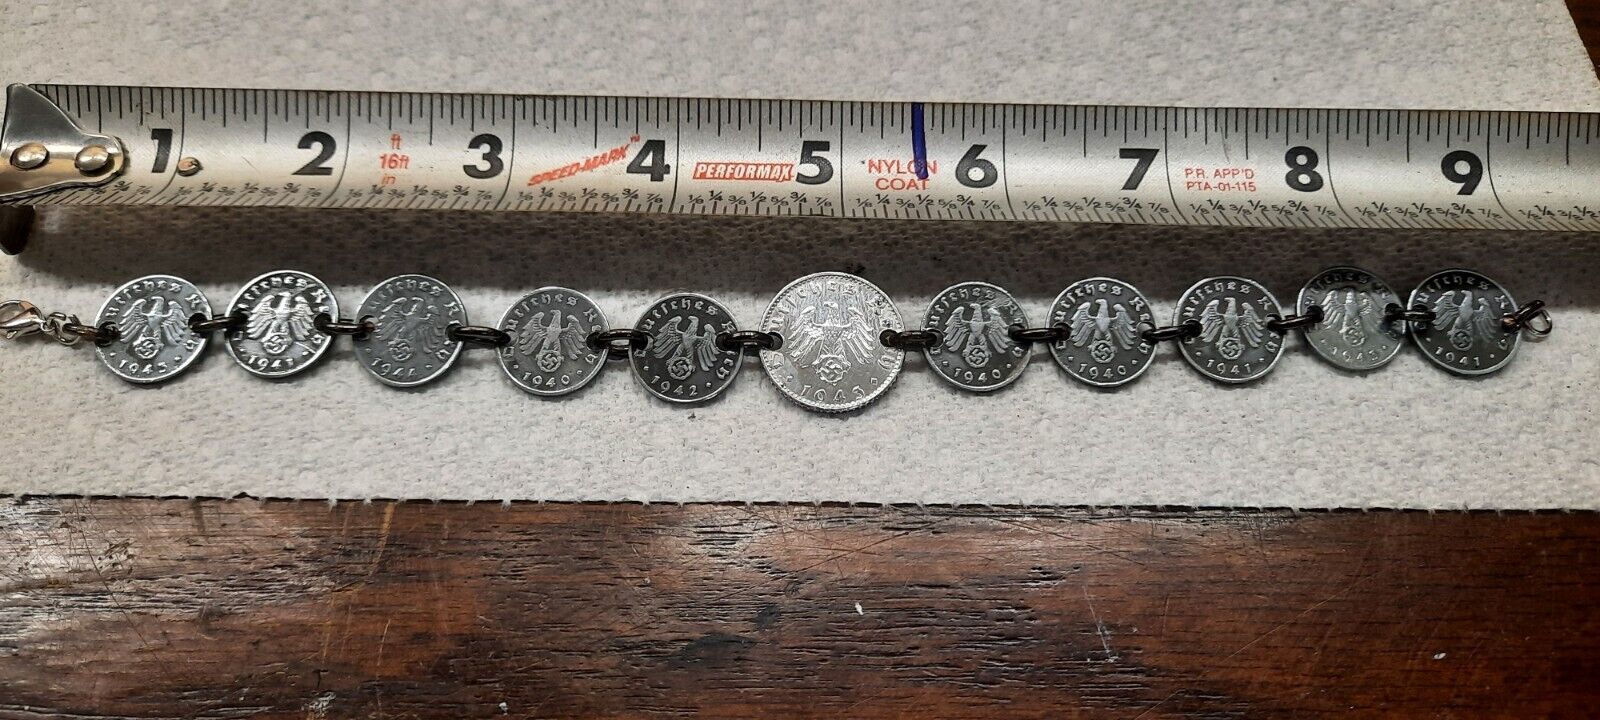 WW2 Original German Coins from the battlefield Bracelet 